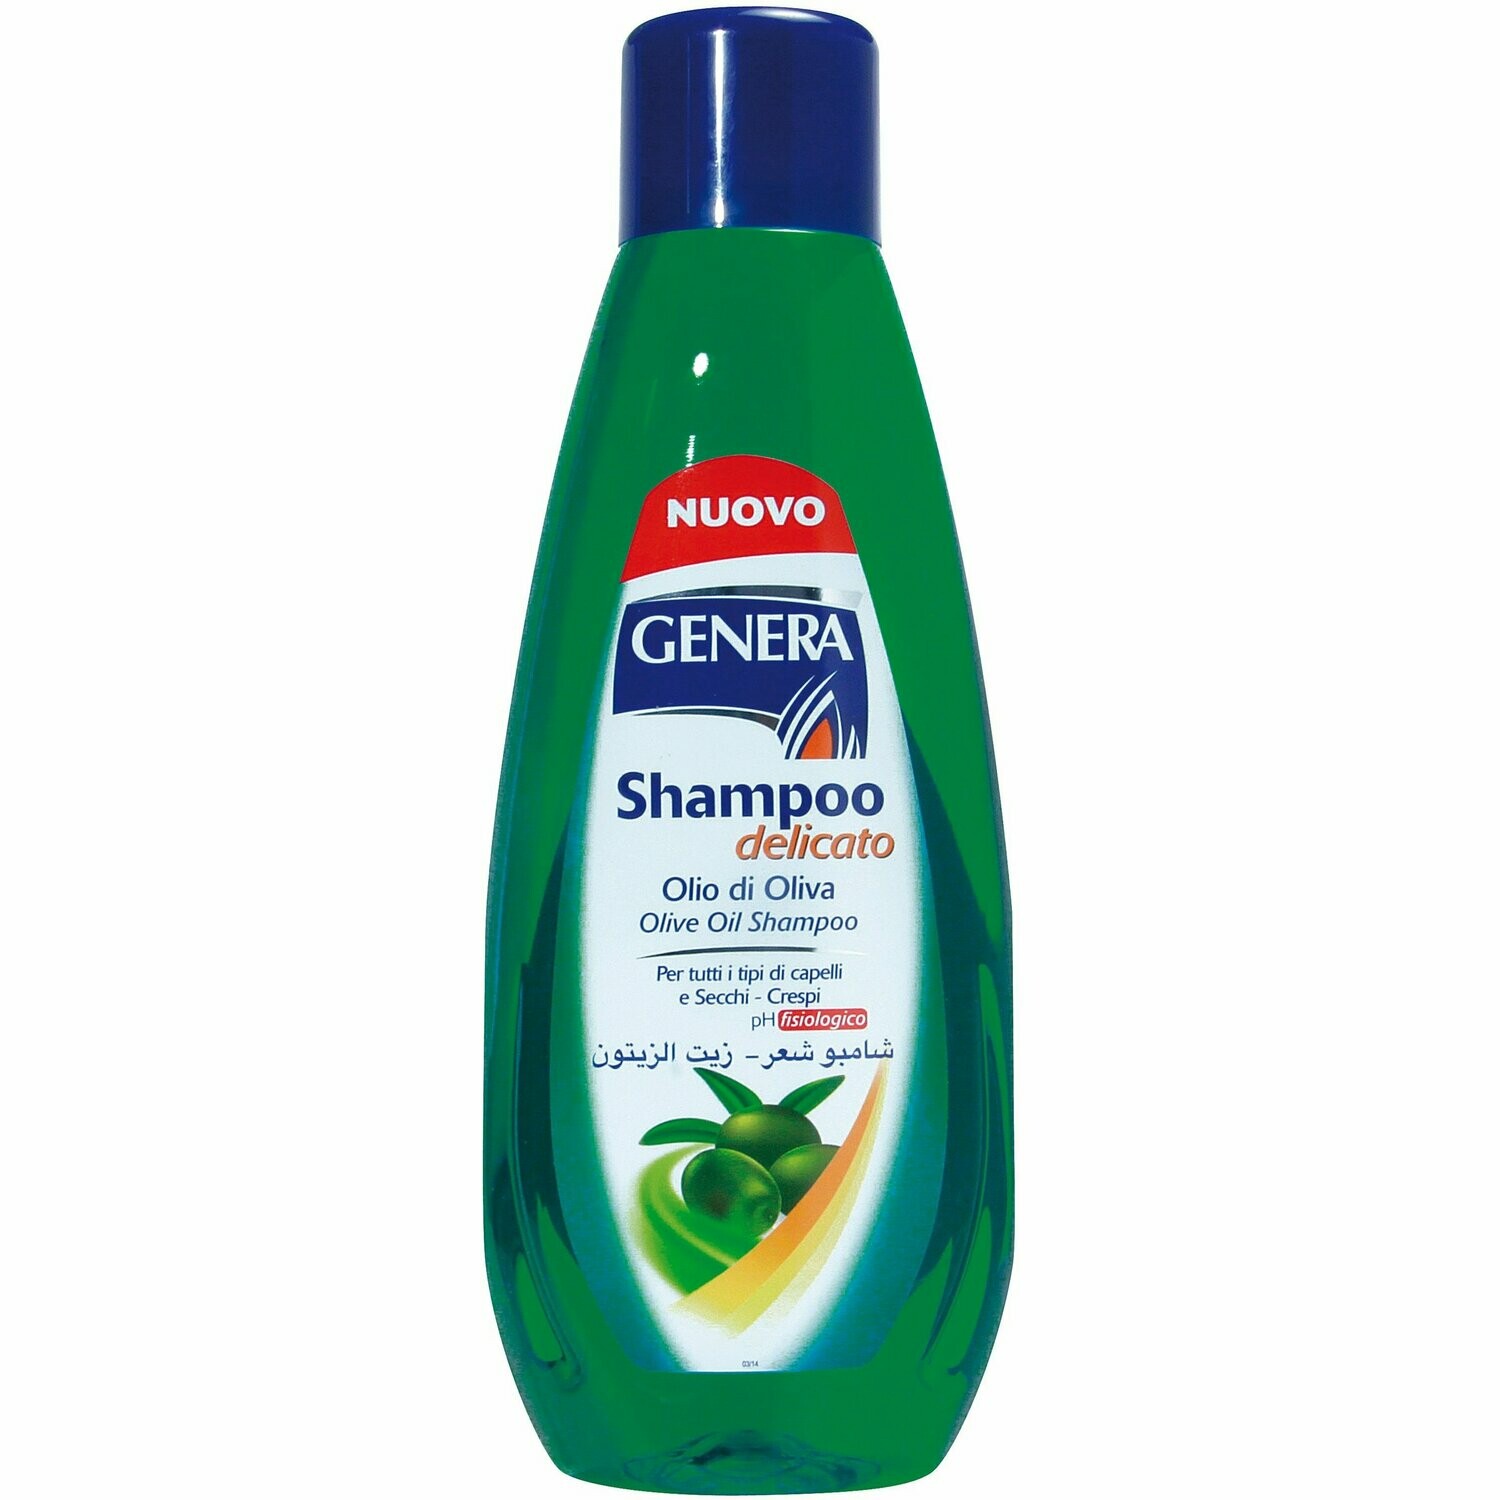 GENERA Shampoo